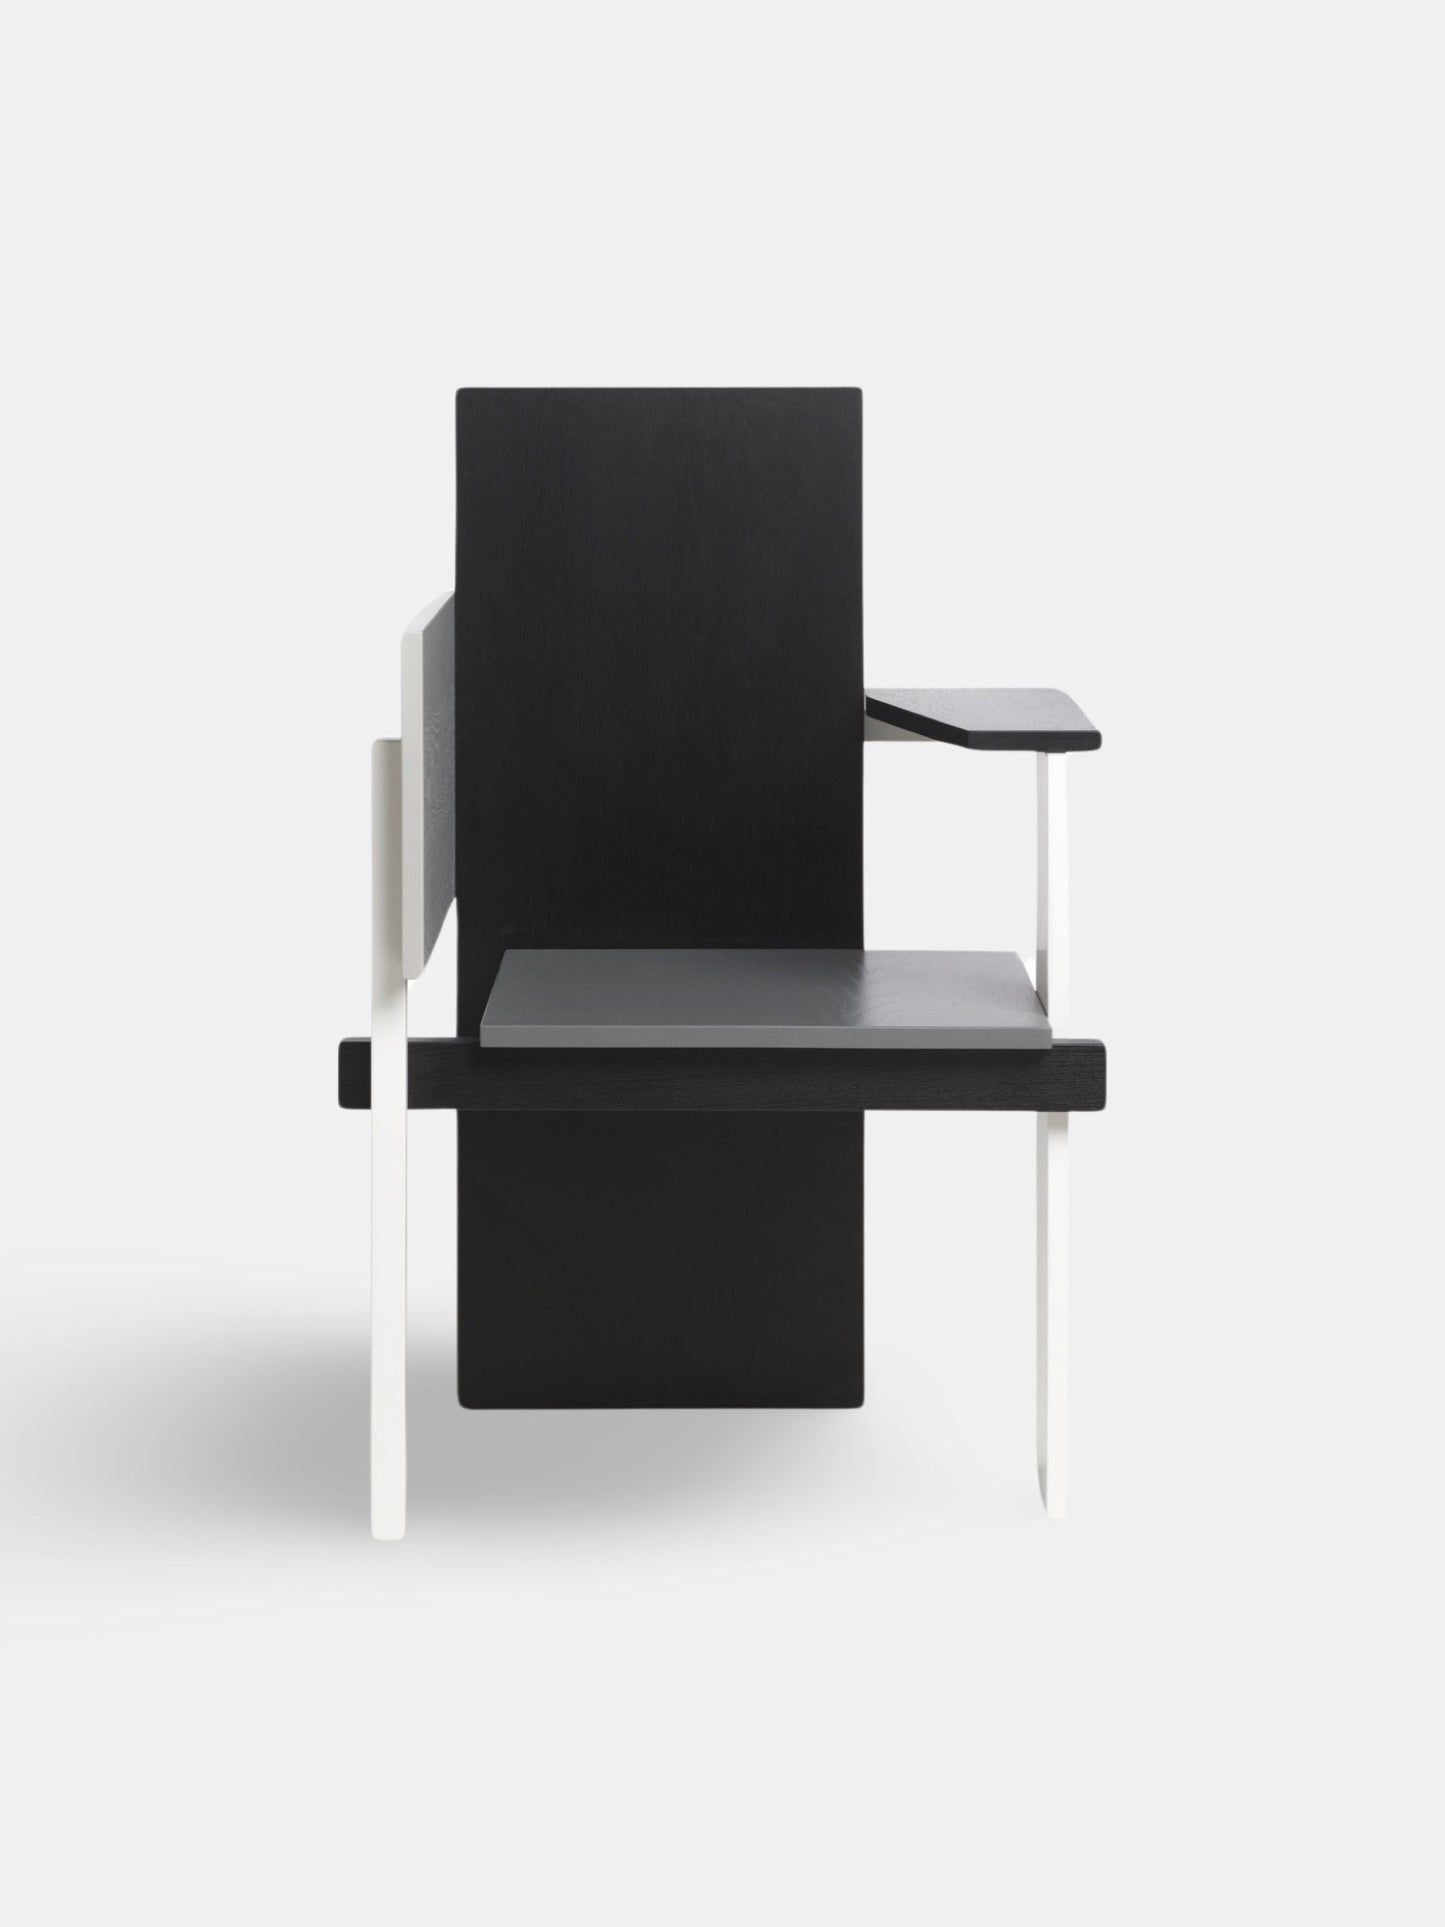 Berlin Chair designed by Gerrit Rietveld, 1923